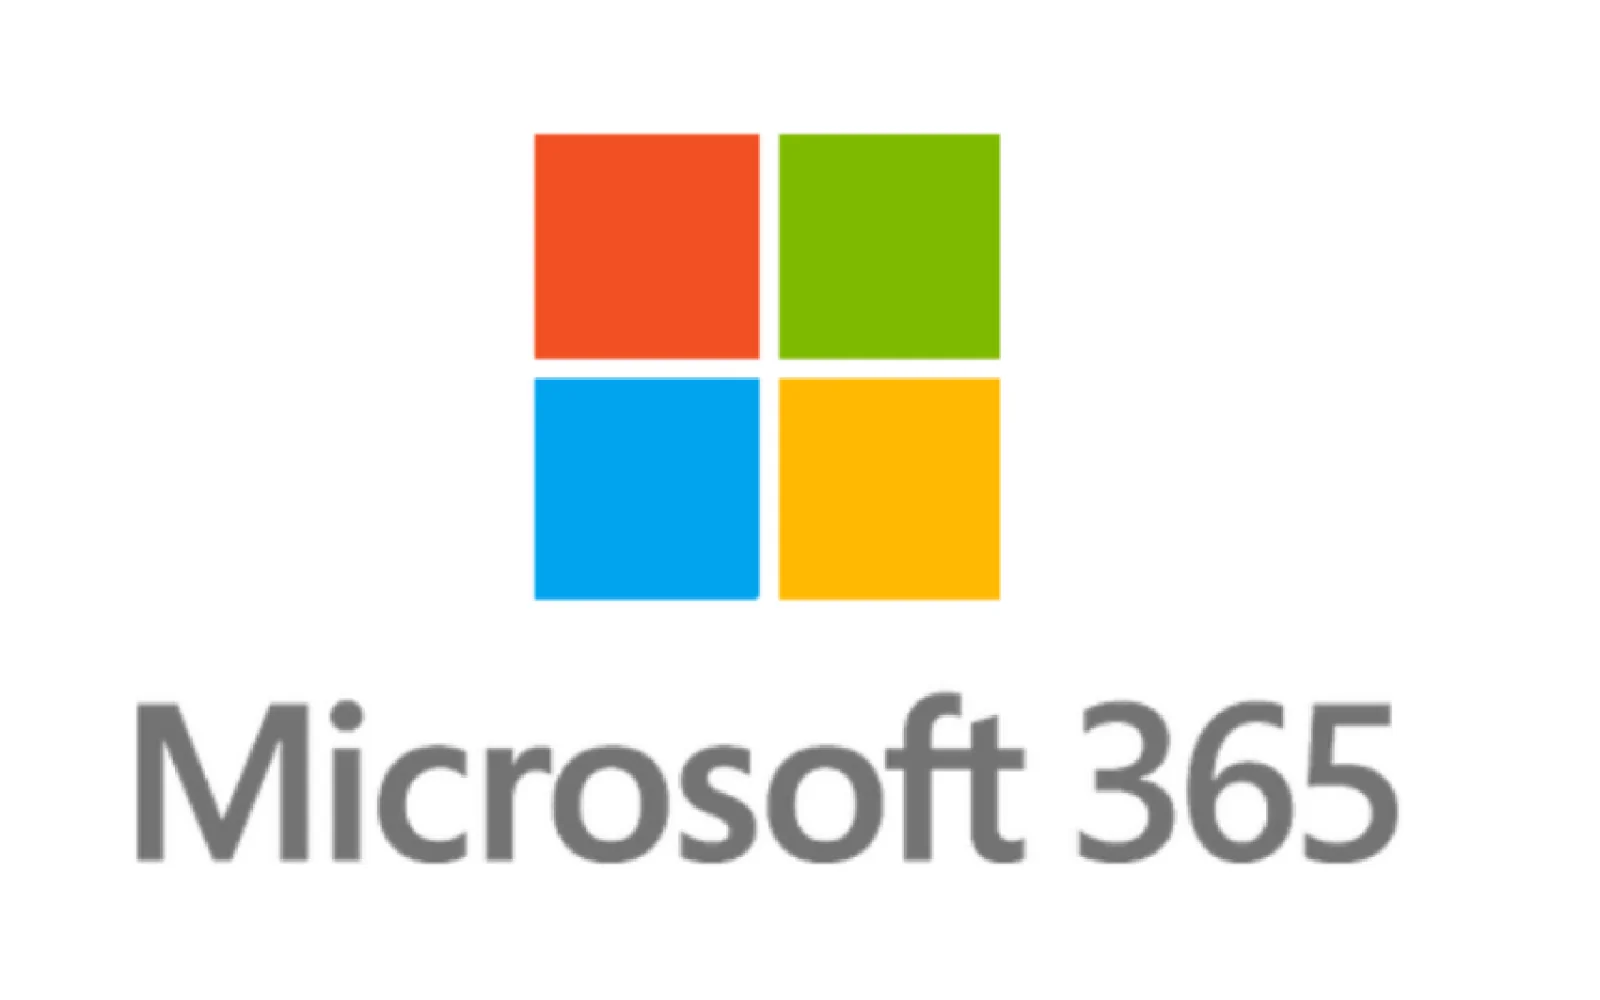 Microsoft-365 logo